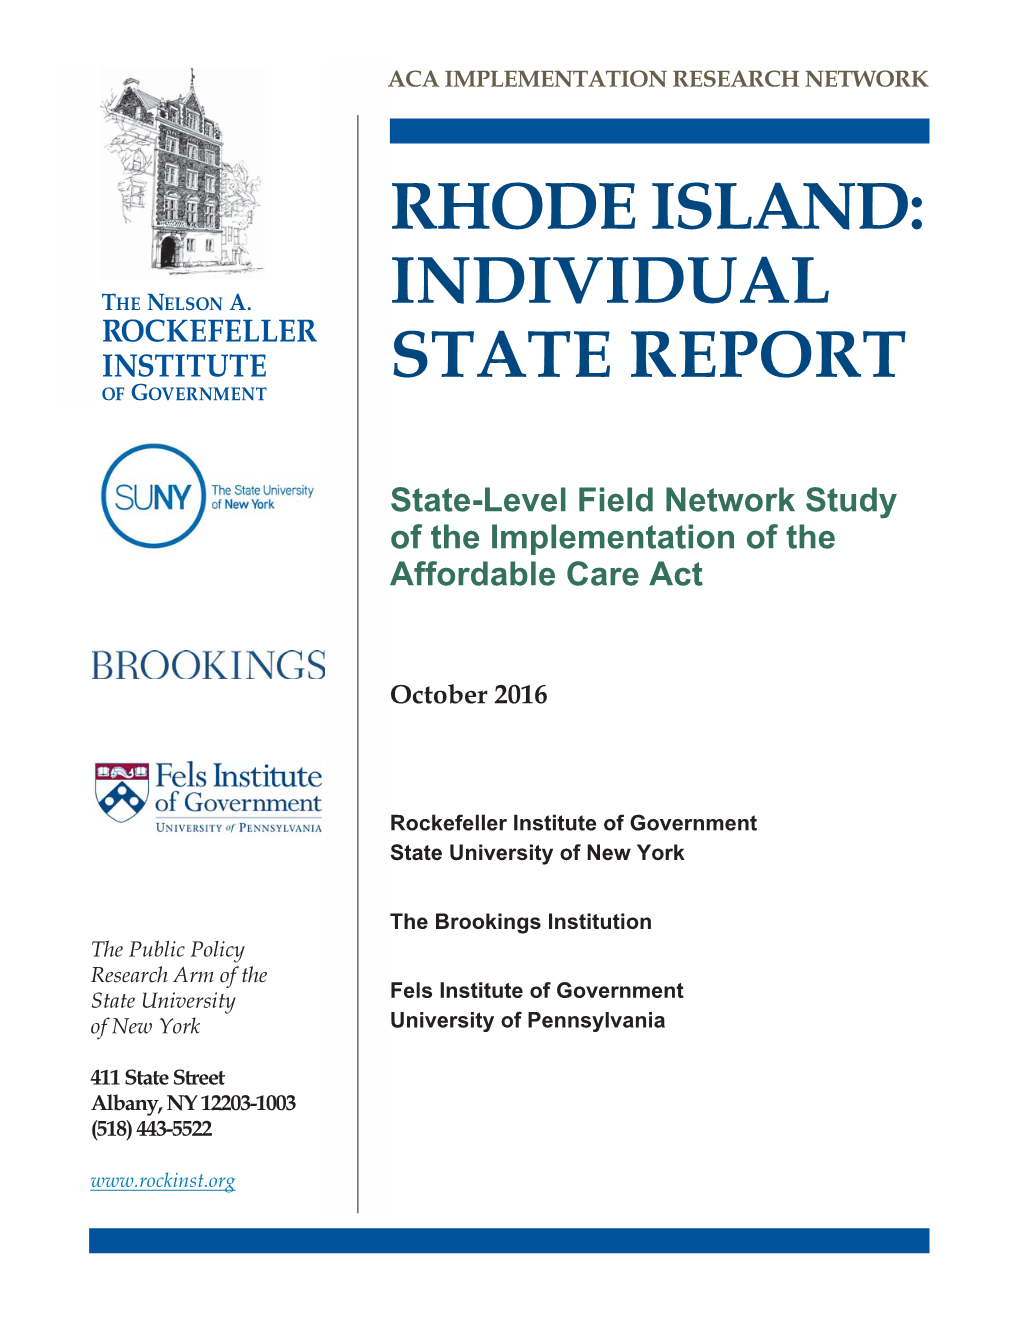 Rhode Island: Individual State Report